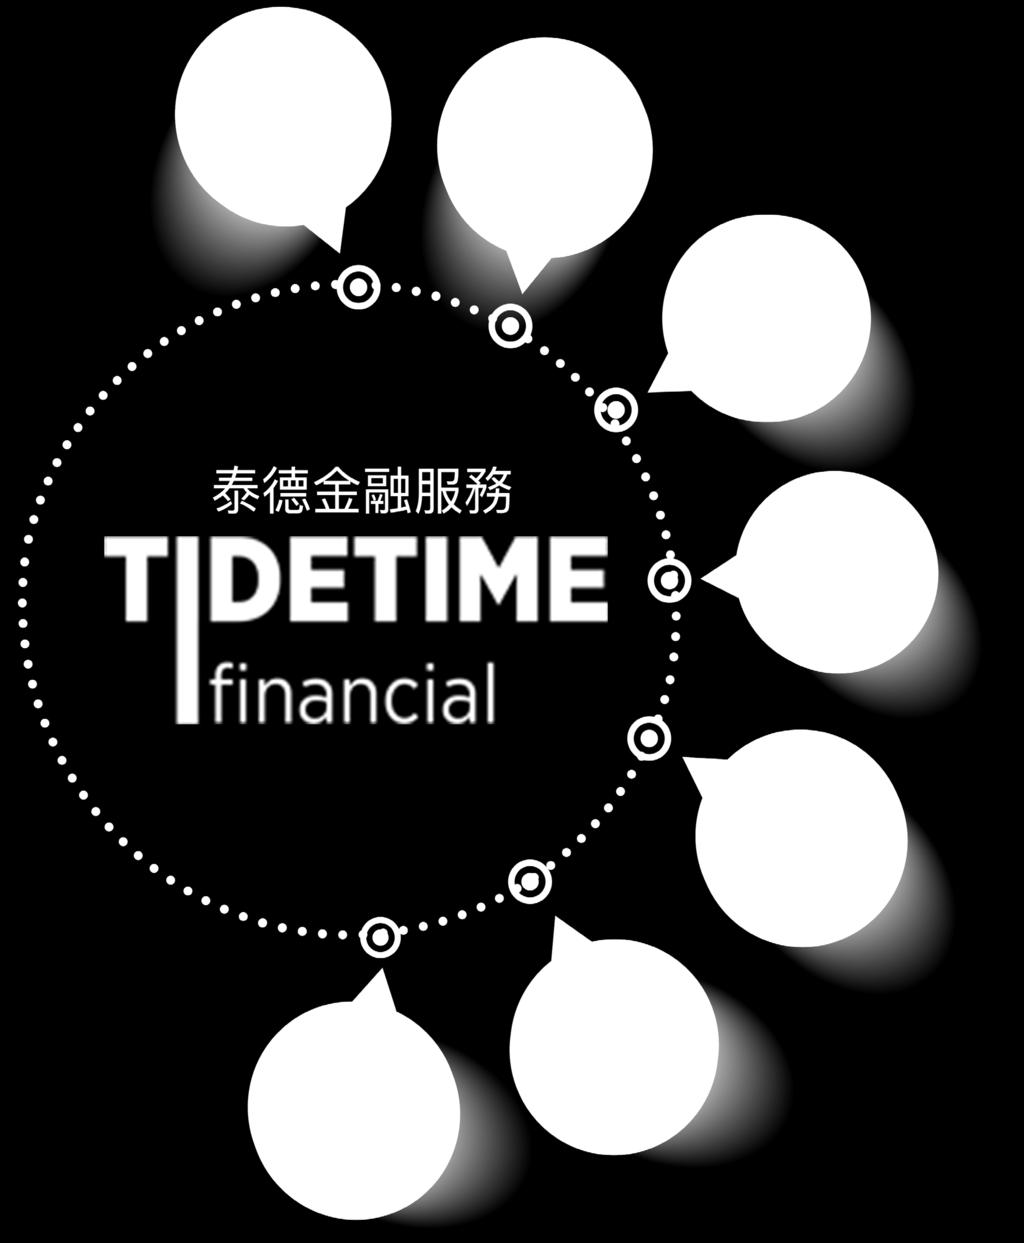 TideBit 本土化為主多平台的區塊鏈資產交易服務 Global blockchain asset and cryptocurrency exchange that supports major fiat currencies.